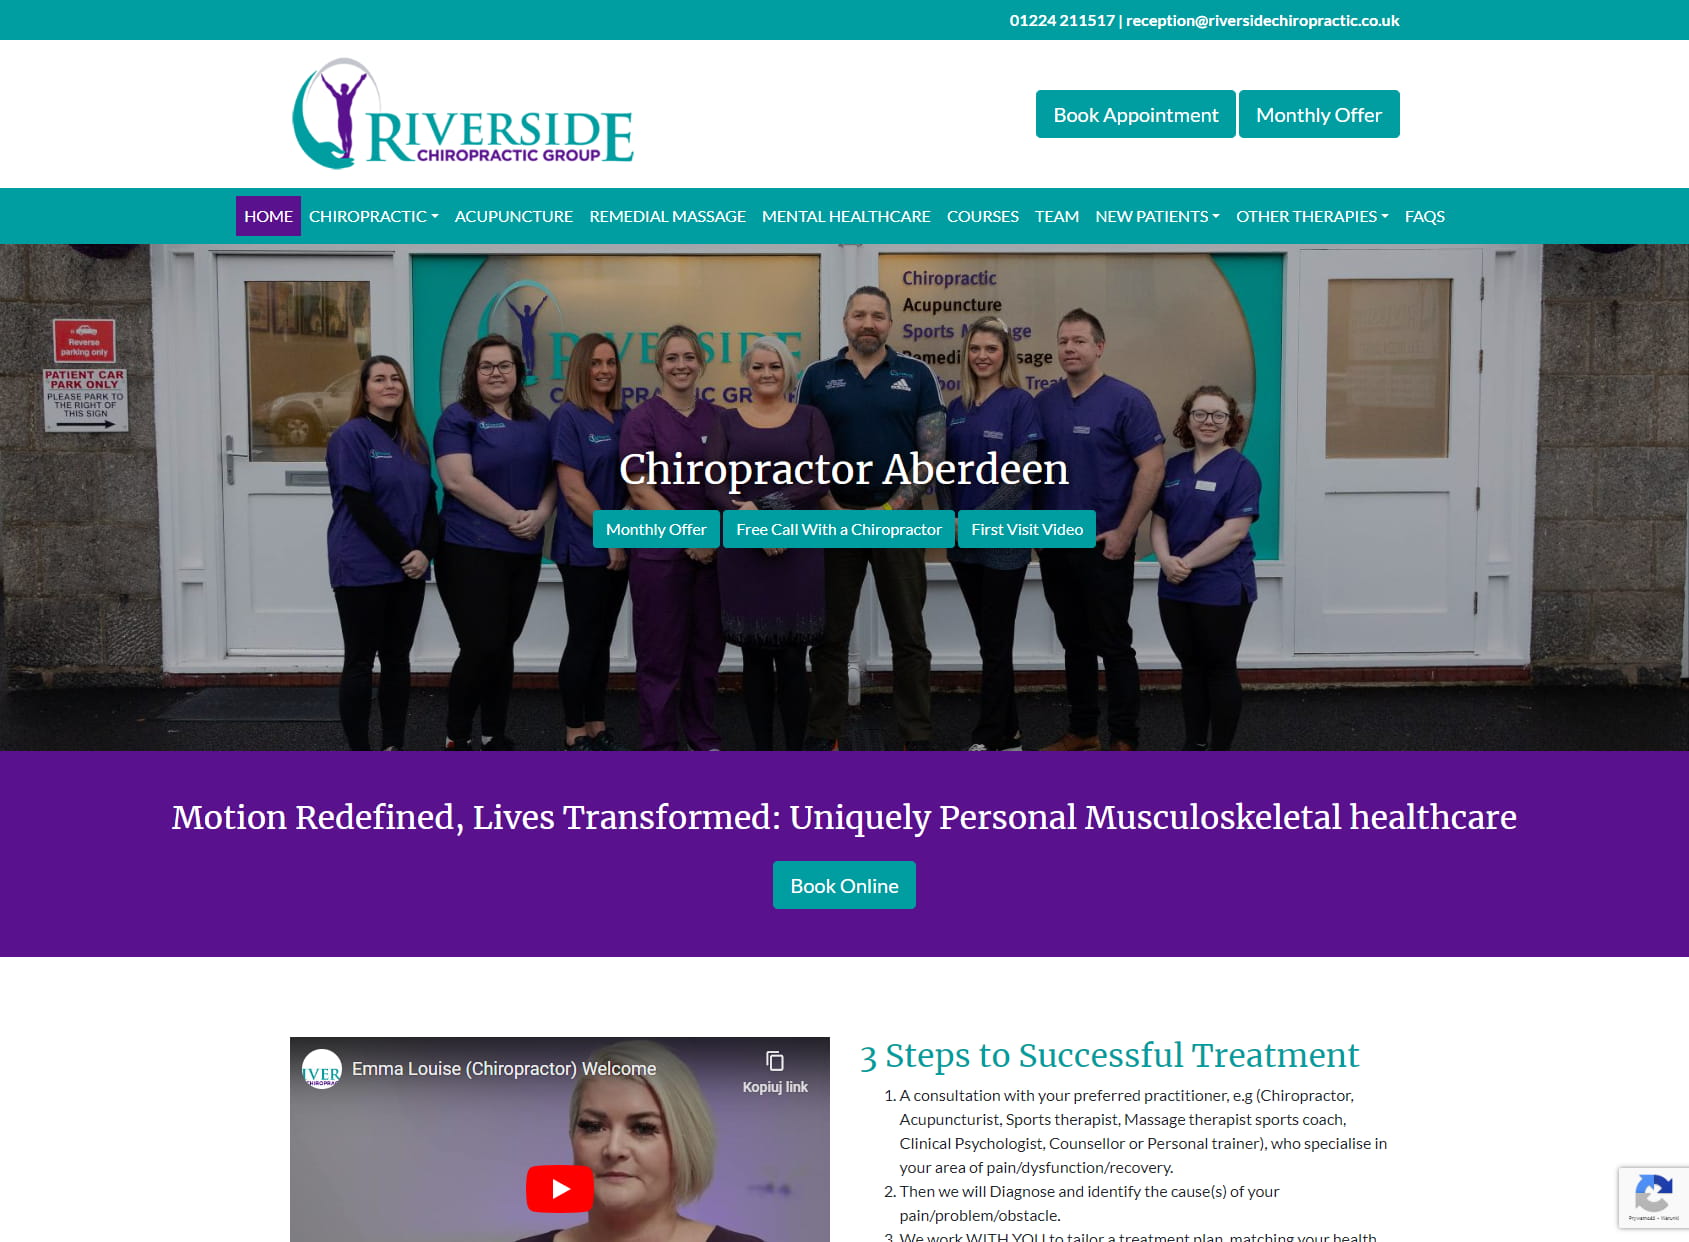 Riverside Chiropractic Group